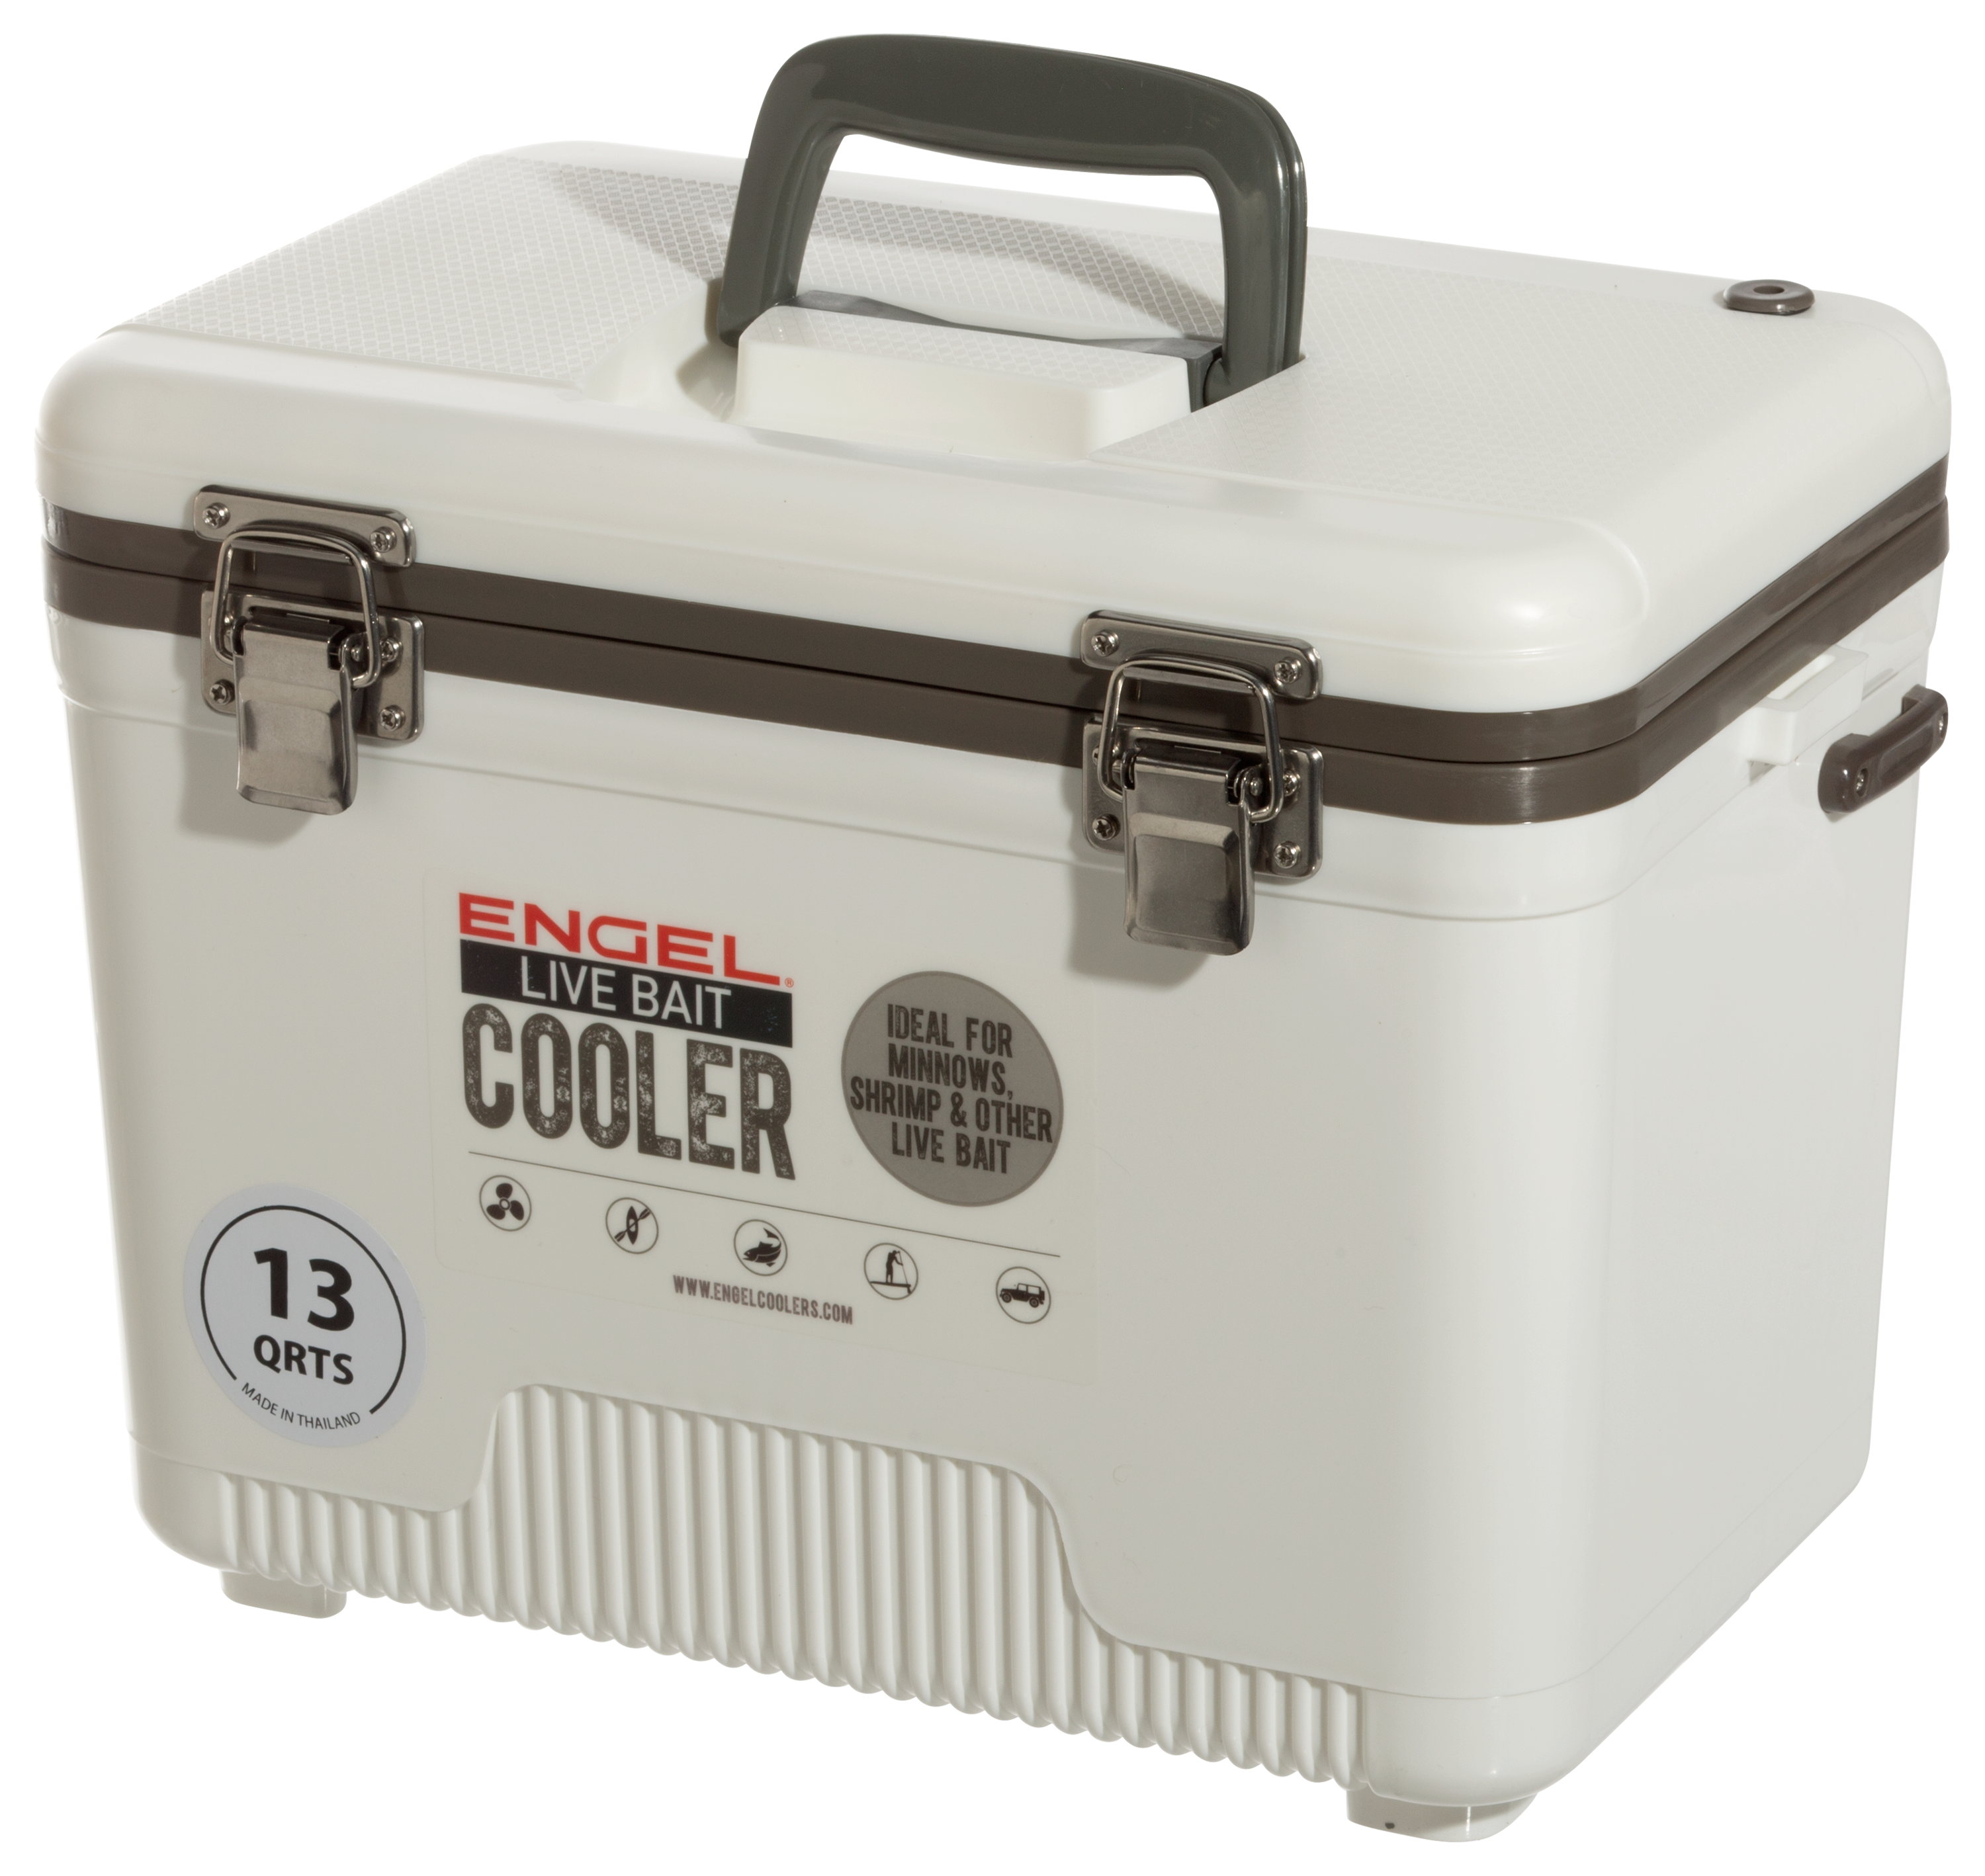 Engel Live Bait Cooler with Engel Aerator